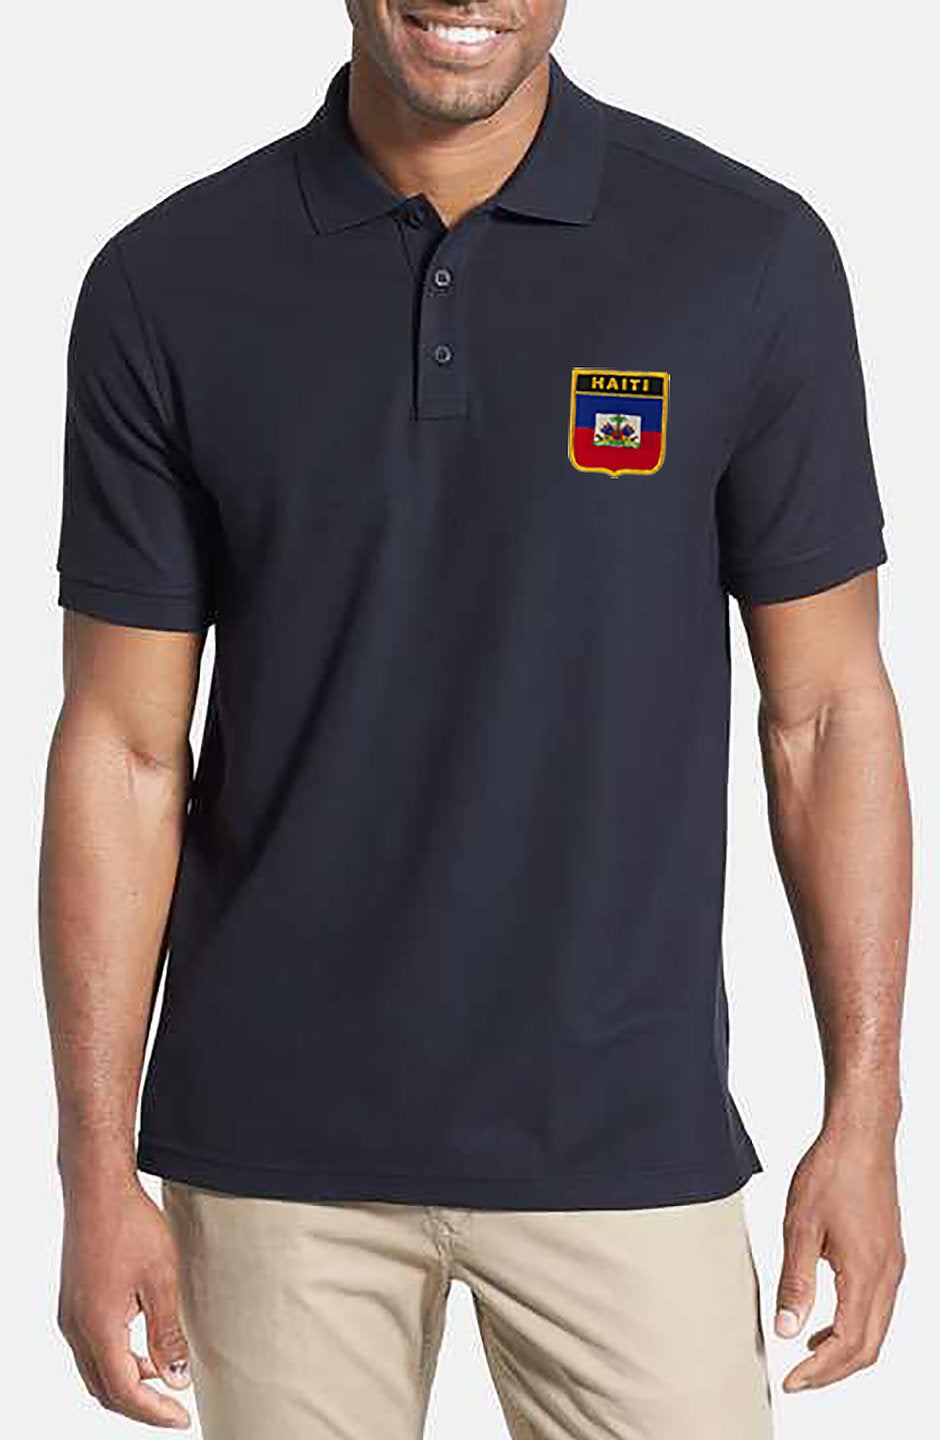 Haiti Flag Polo Shirt